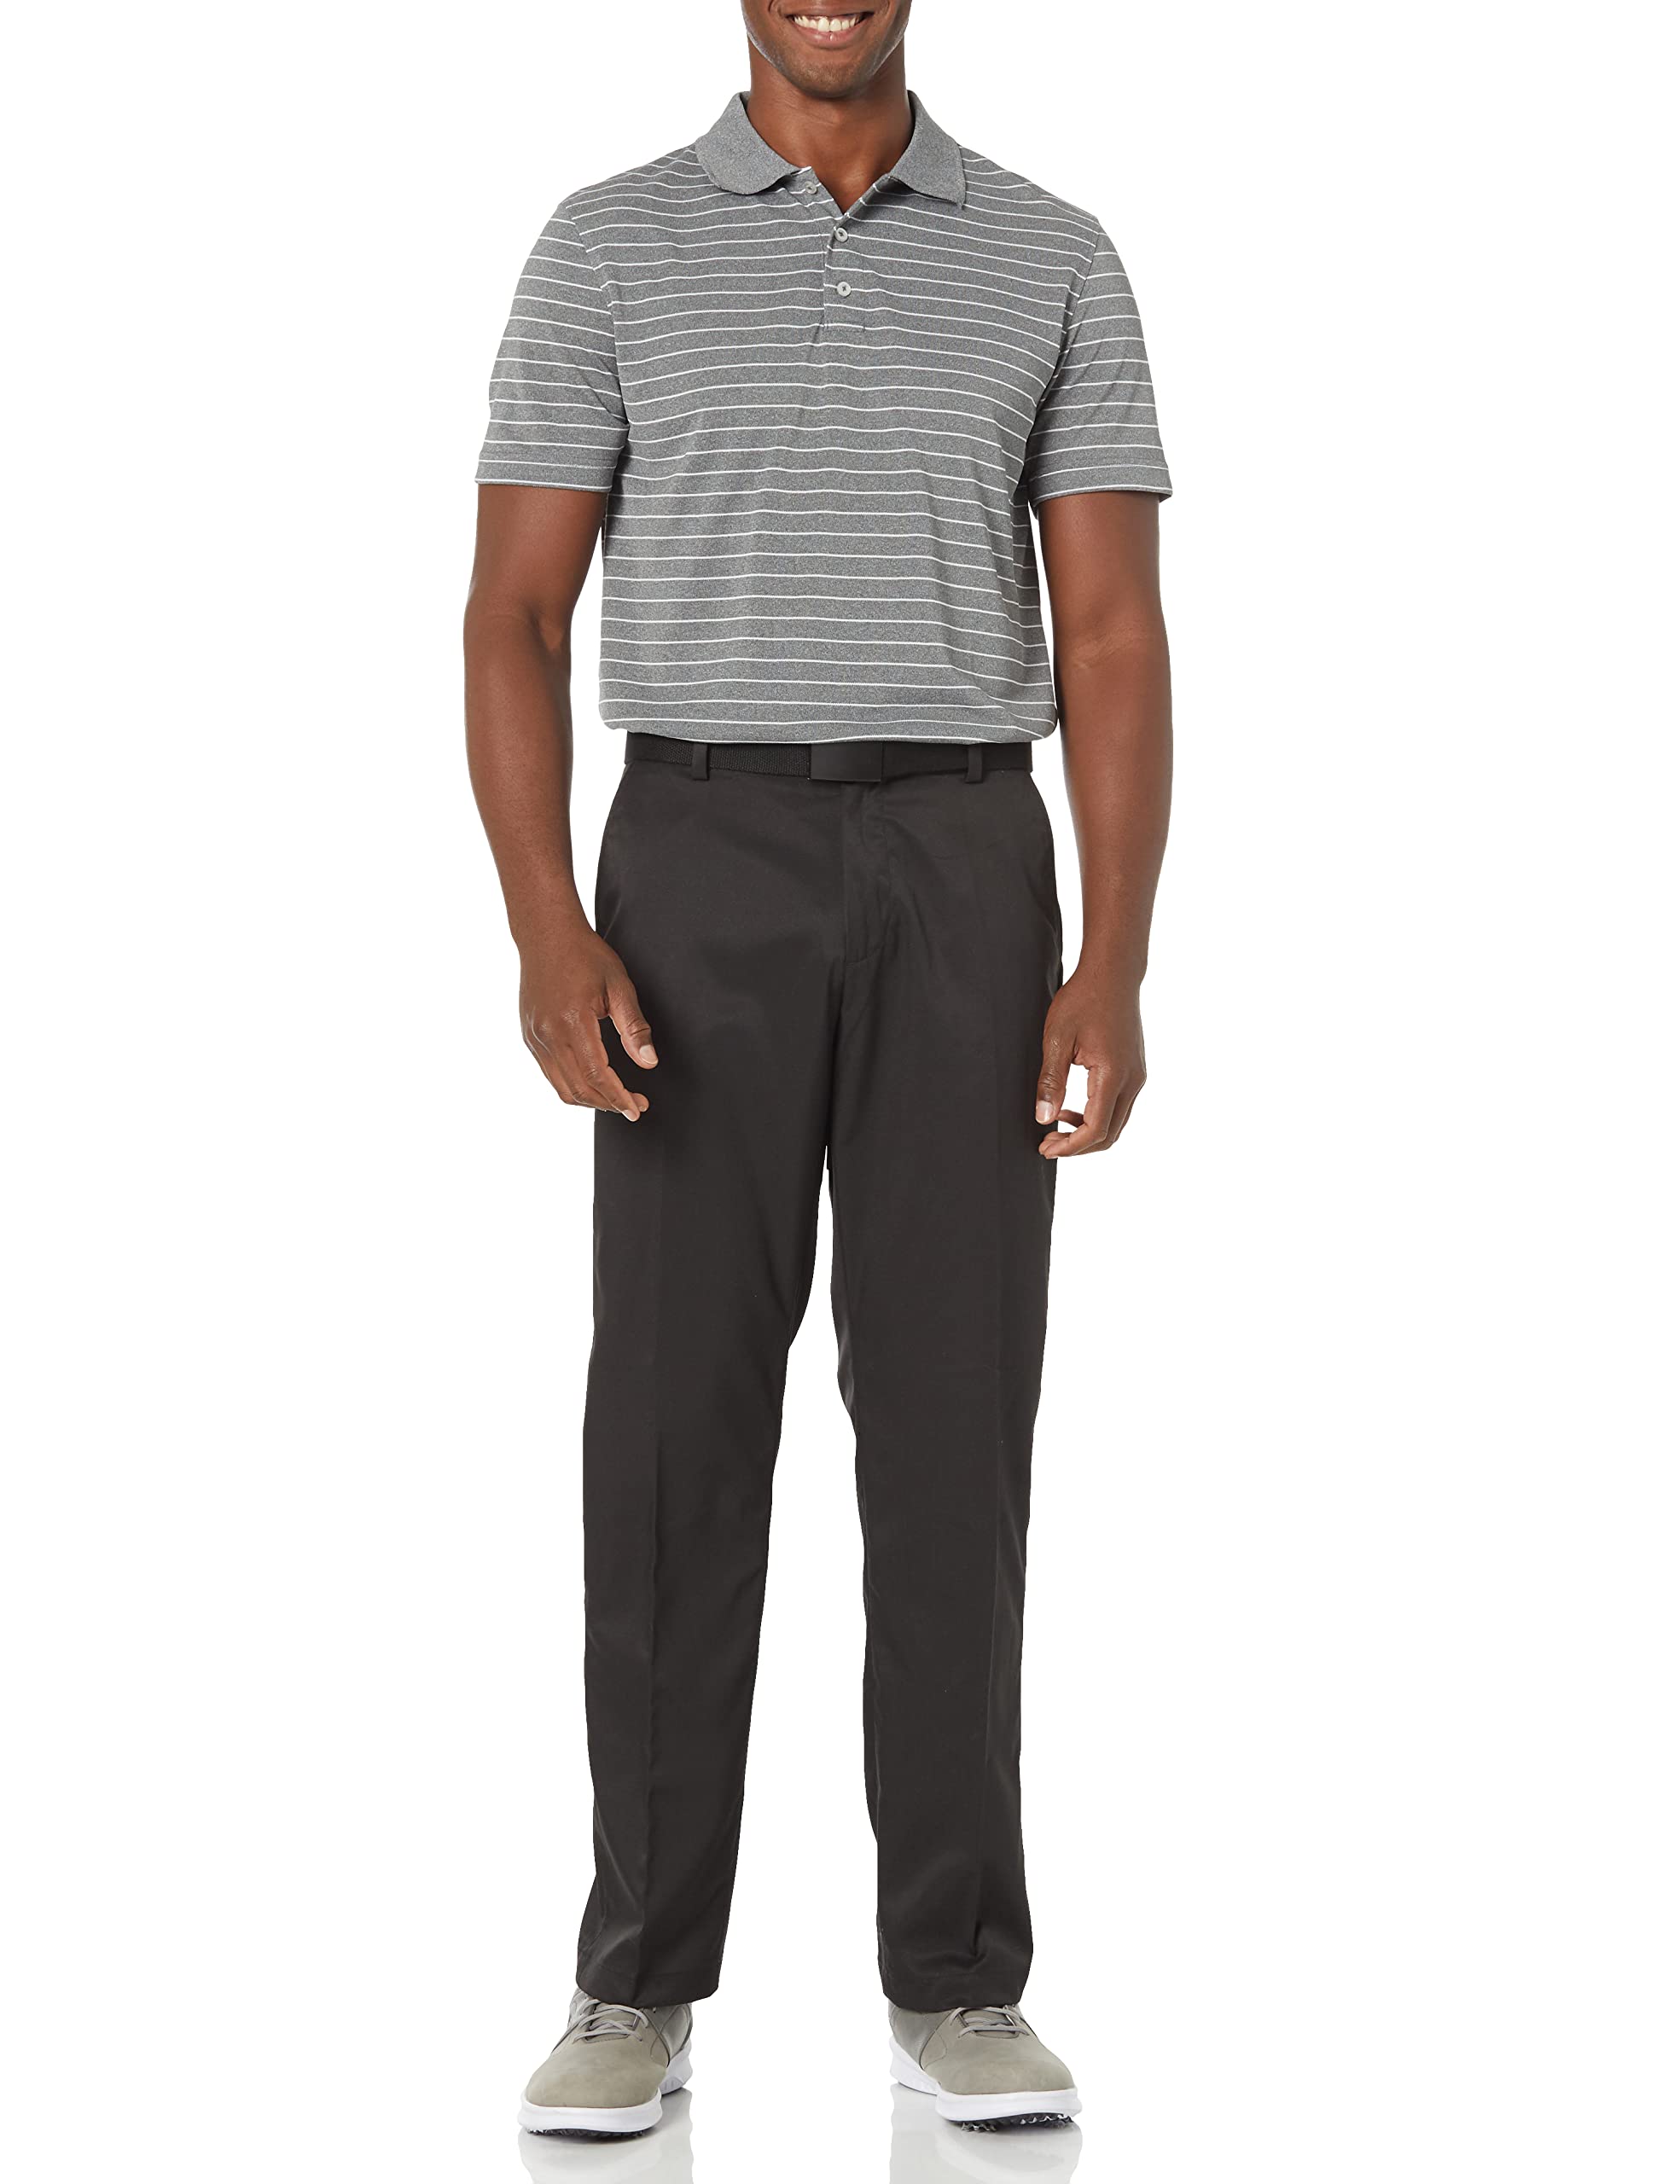 Amazon Essentials Men's Slim-Fit Quick-Dry Golf Polo Shirt